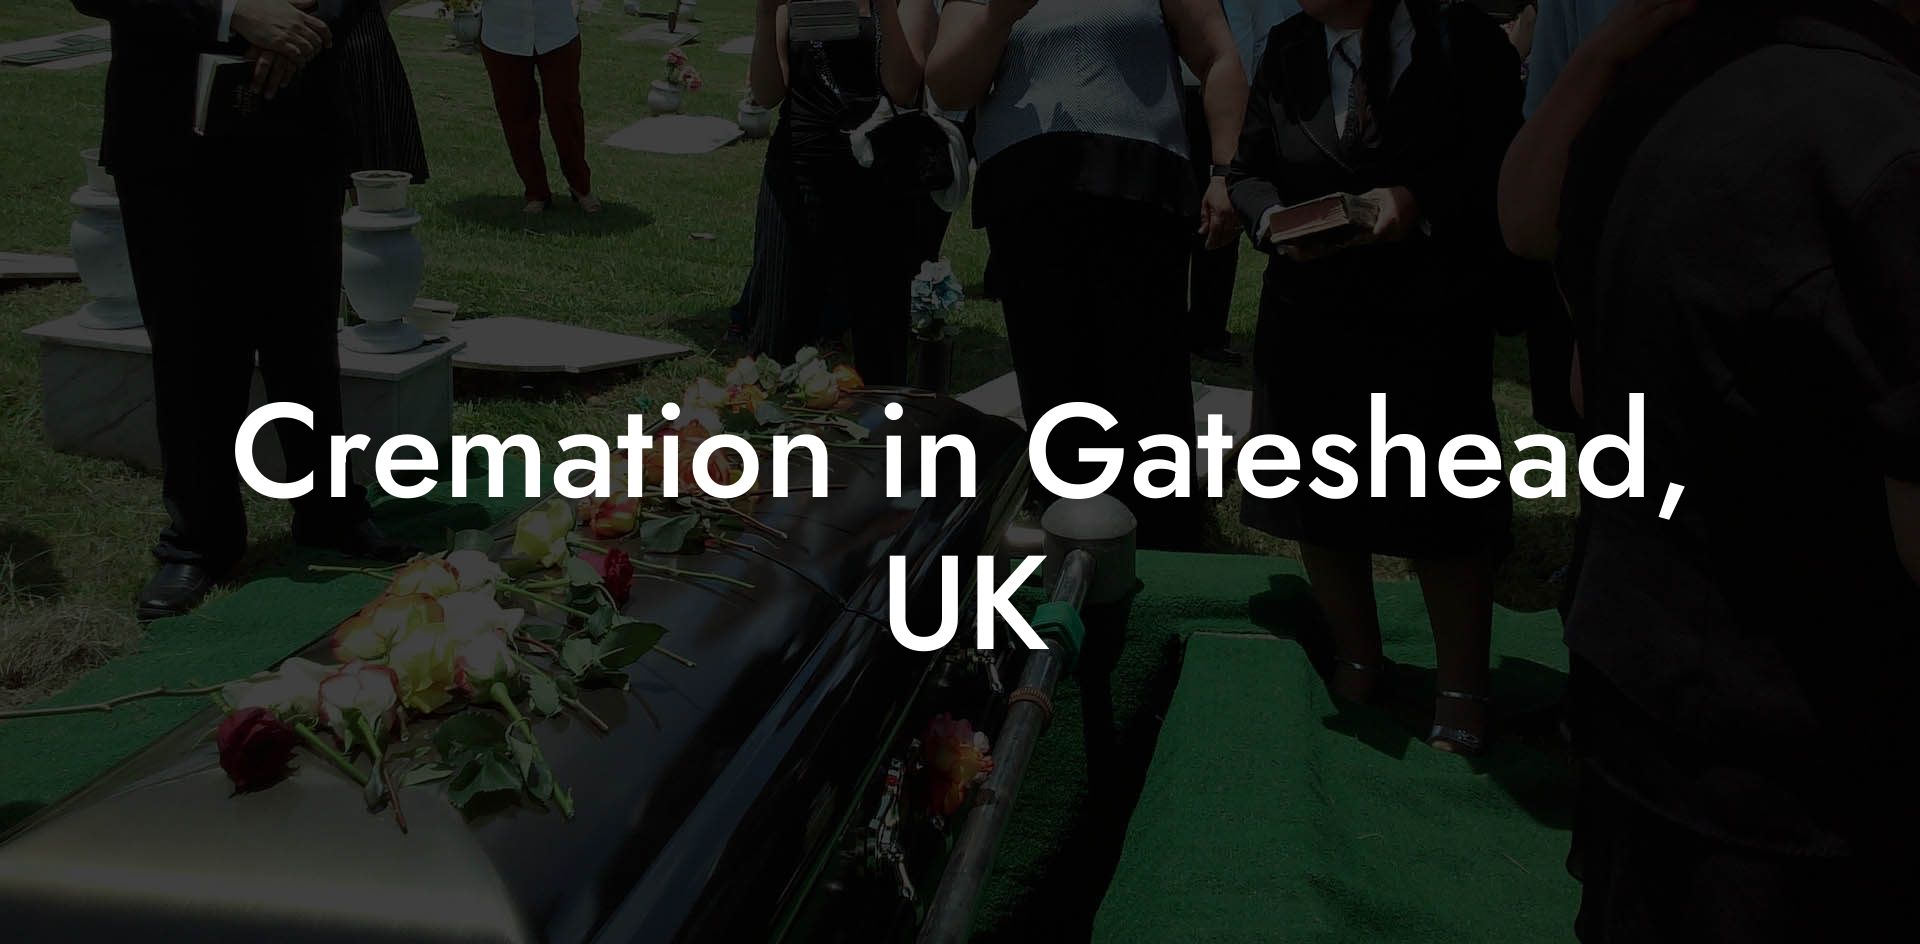 Cremation in Gateshead, UK